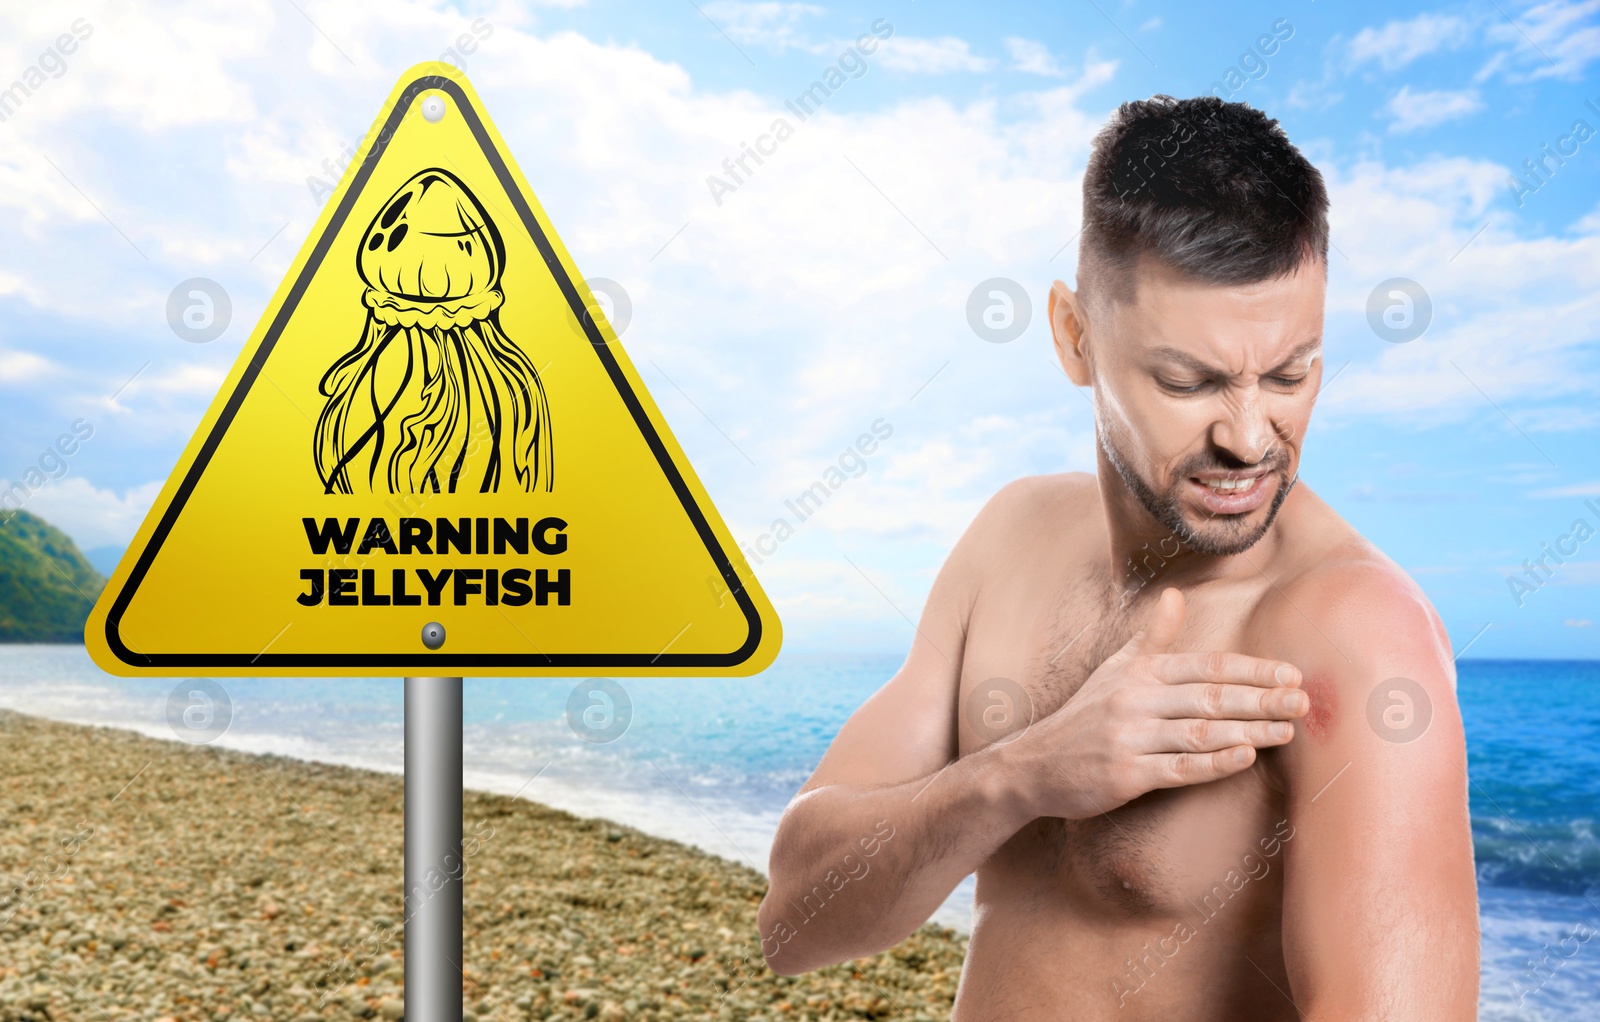 Image of Jellyfish warning sign and injured man on beach. Banner design